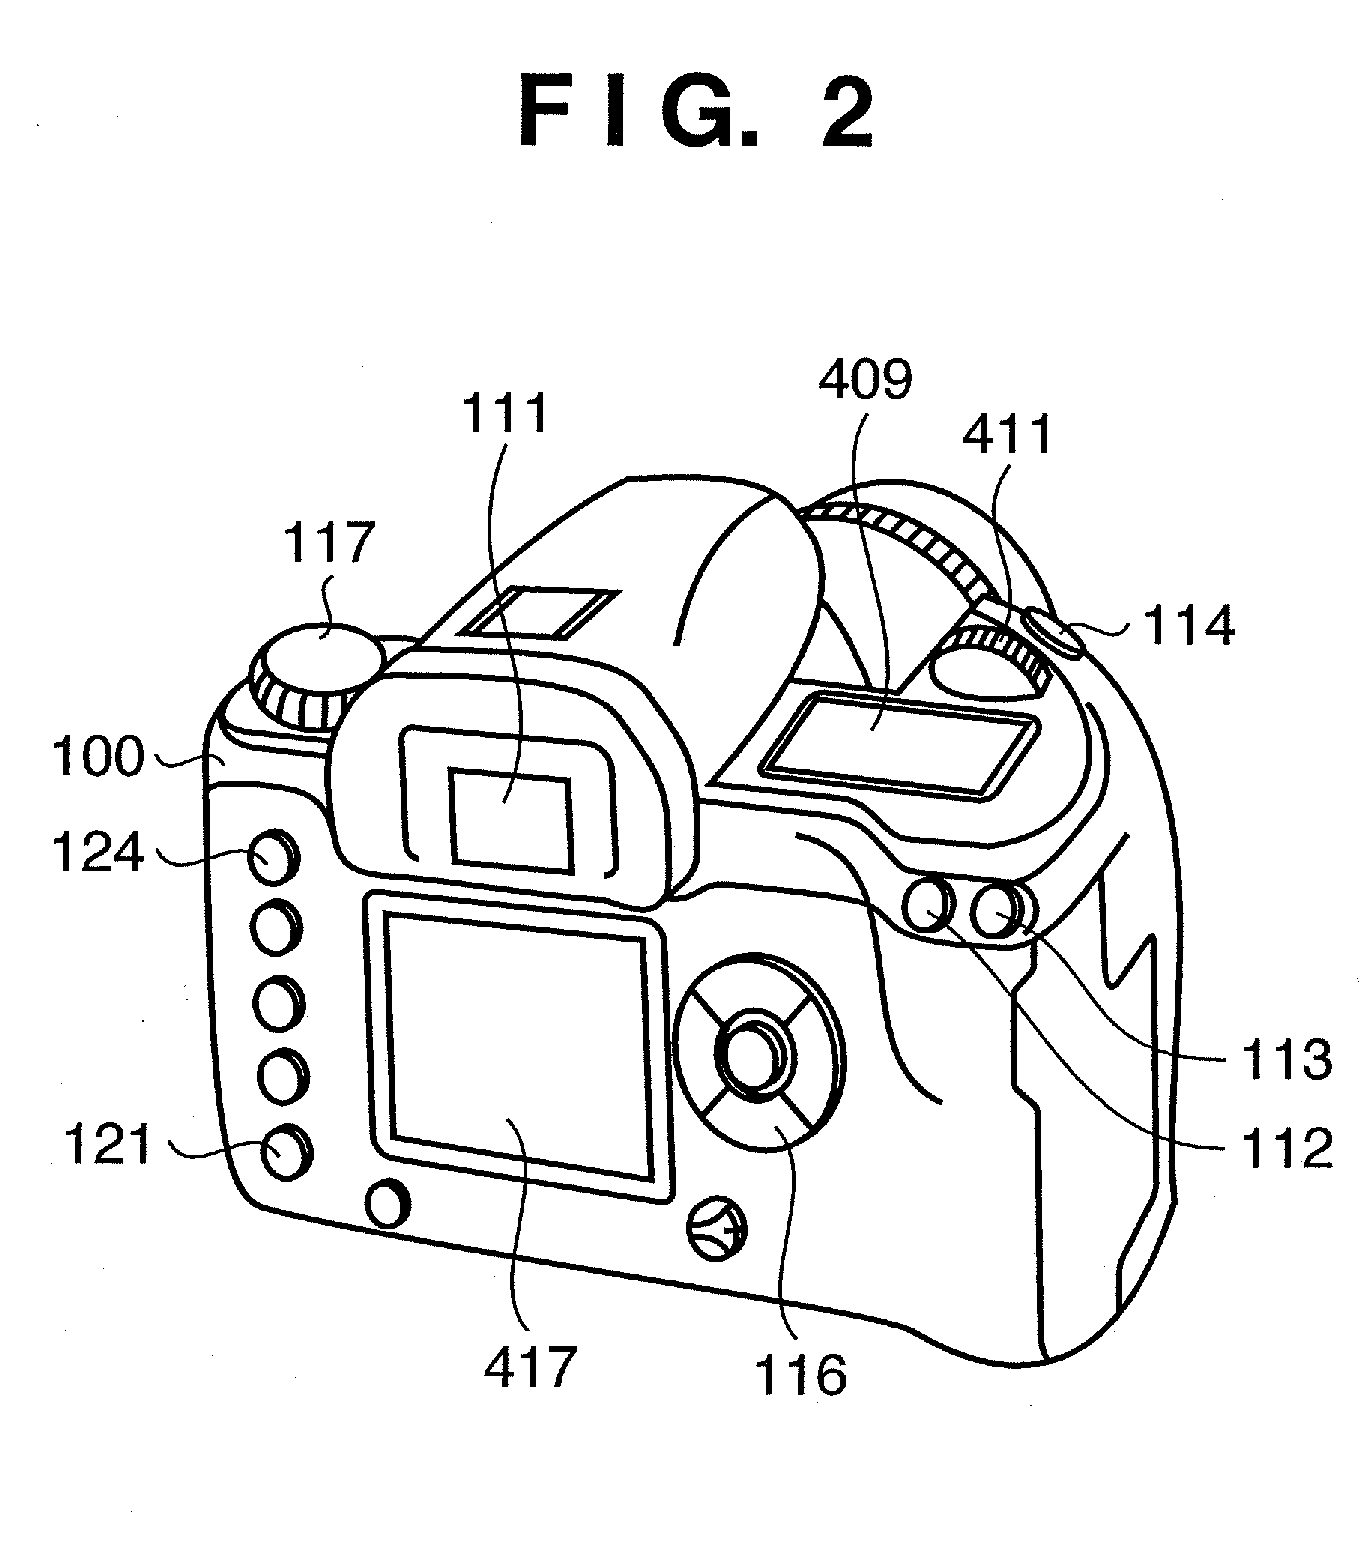 Image capturing apparatus, control method thereof, and program